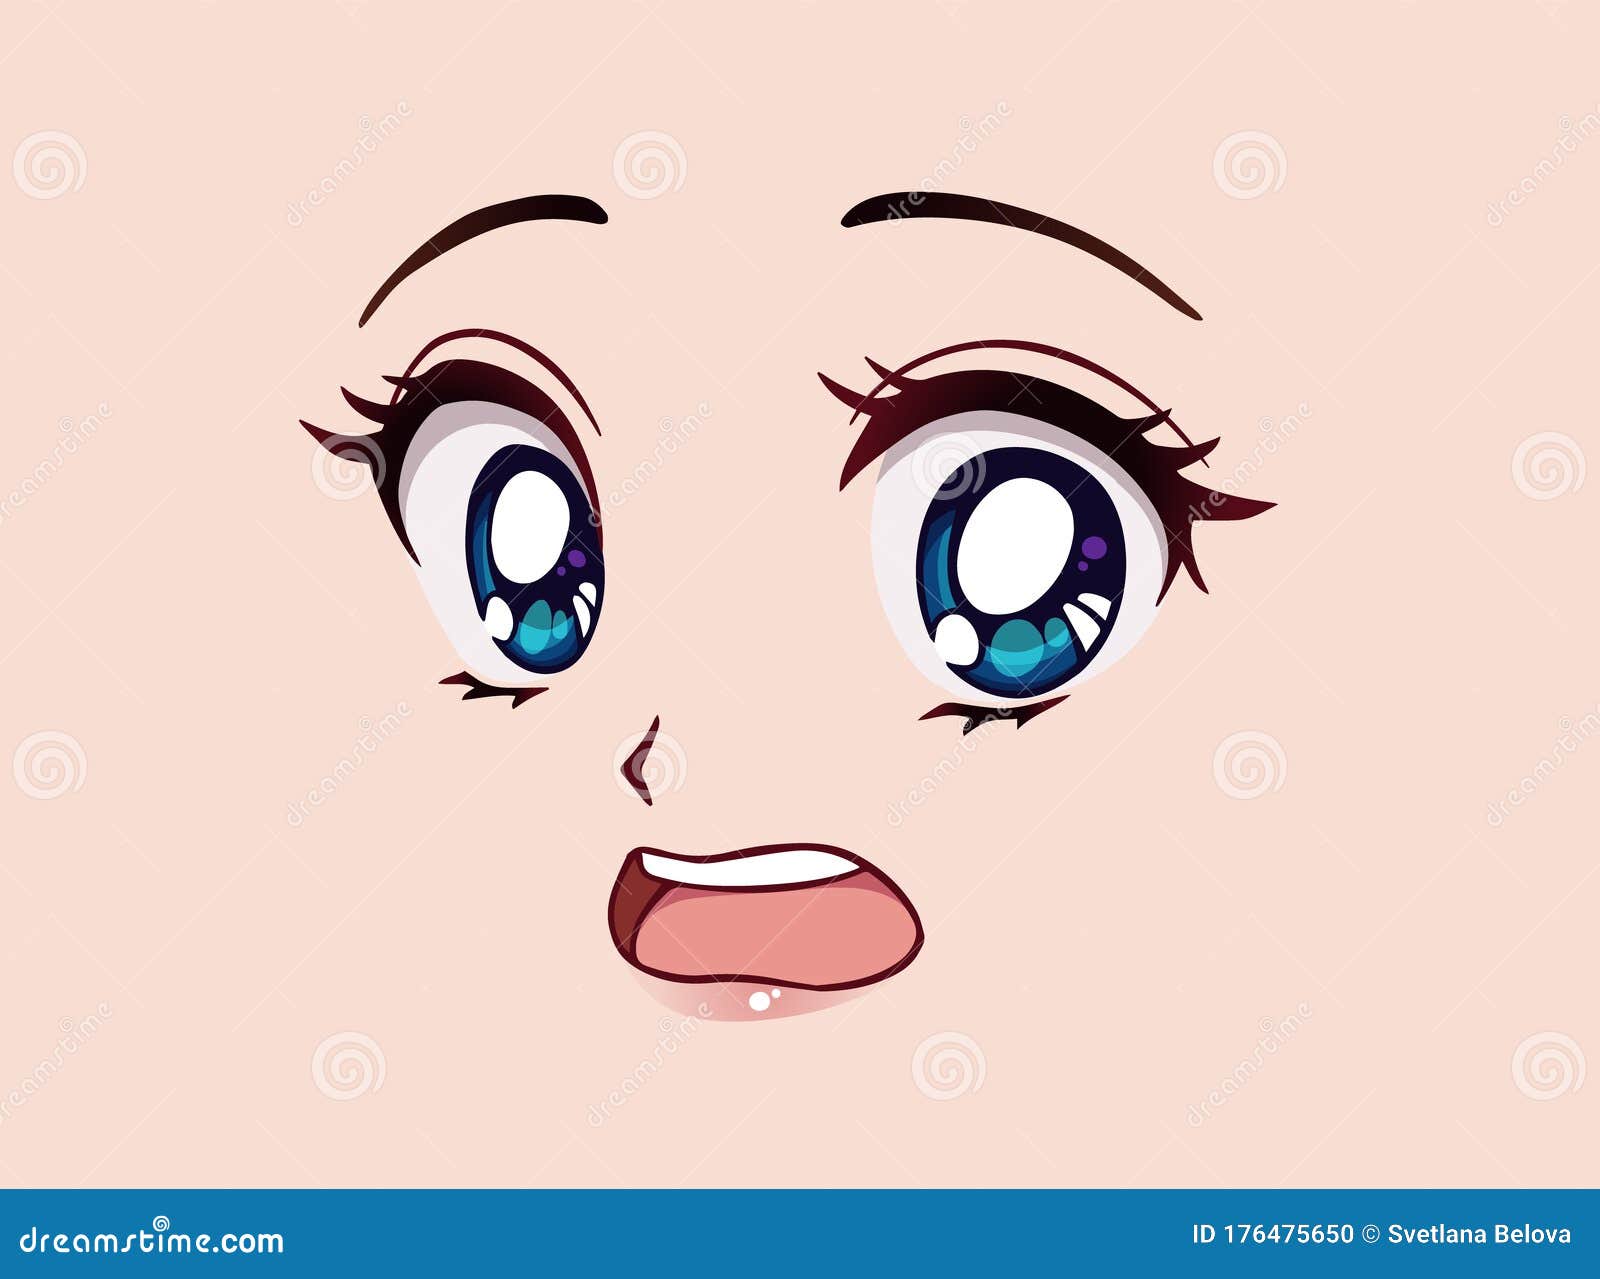 Scared Anime Face. Manga Style Big Blue Eyes, Little Nose and Kawaii ...